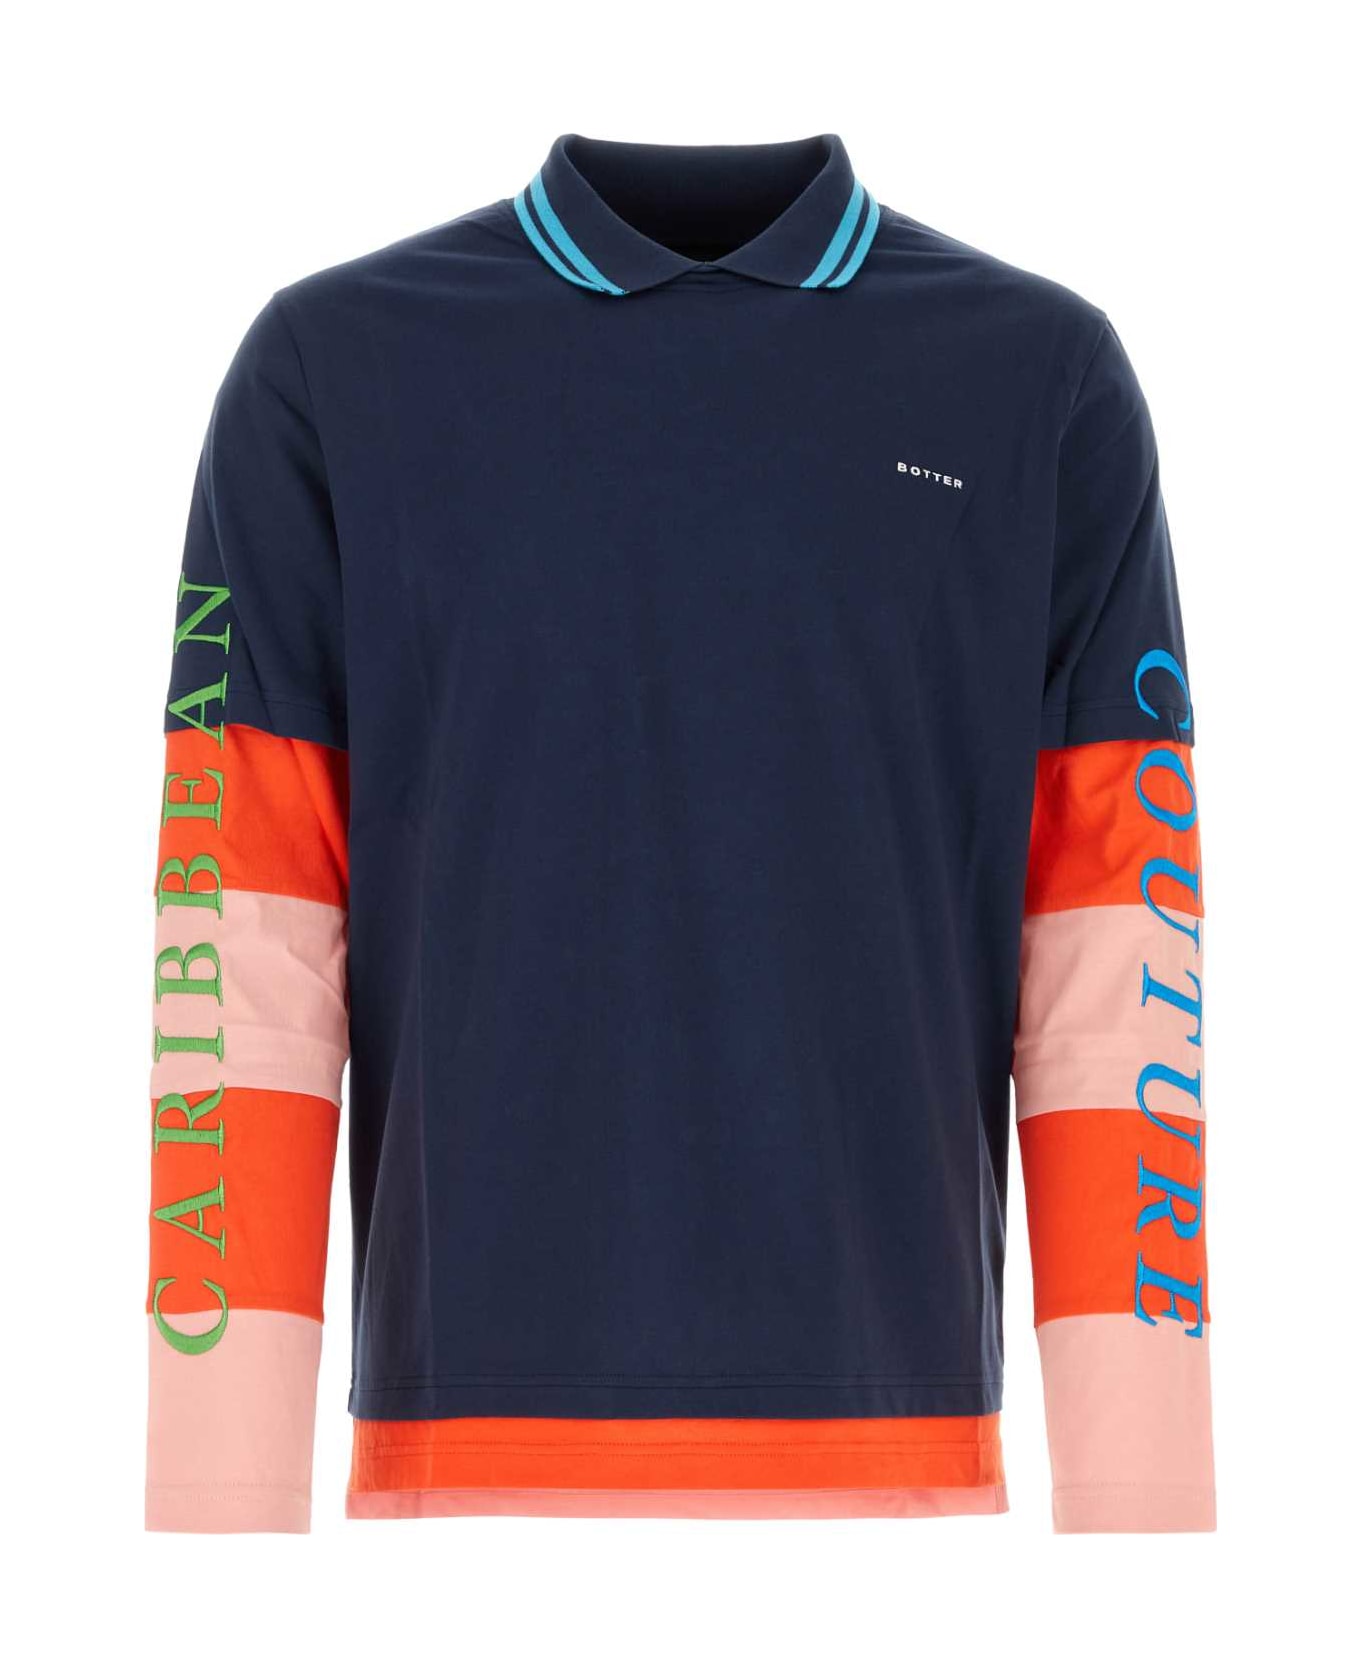 Botter Multicolor Cotton Polo Shirt - NAVY PINKSTR CARIBBEAN COUTURE